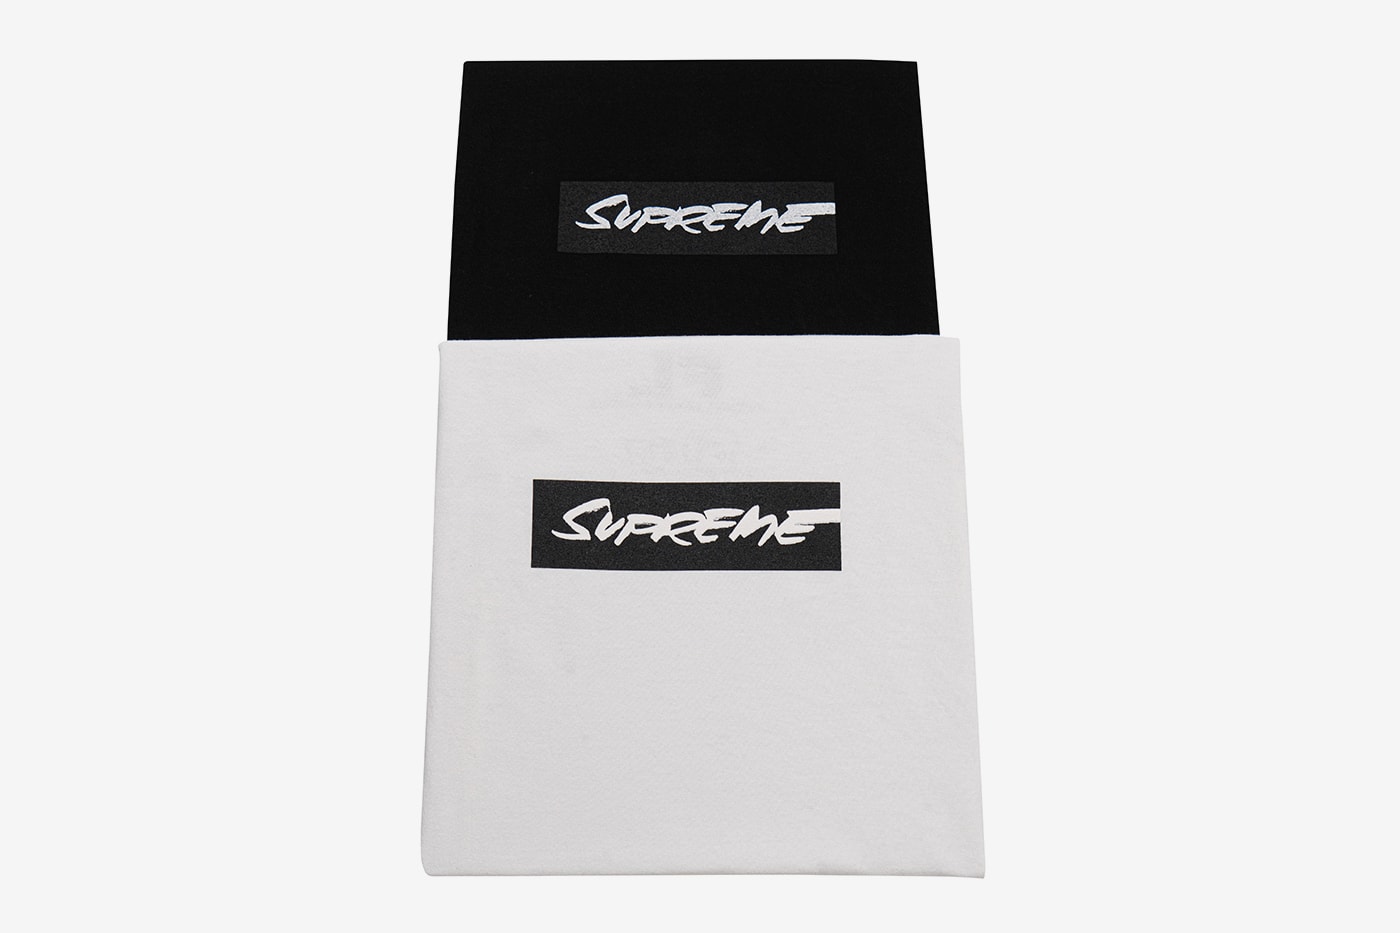 Supreme 全系列 Box Logo T-Shirt 預估拍售價格高達 $200 萬美元